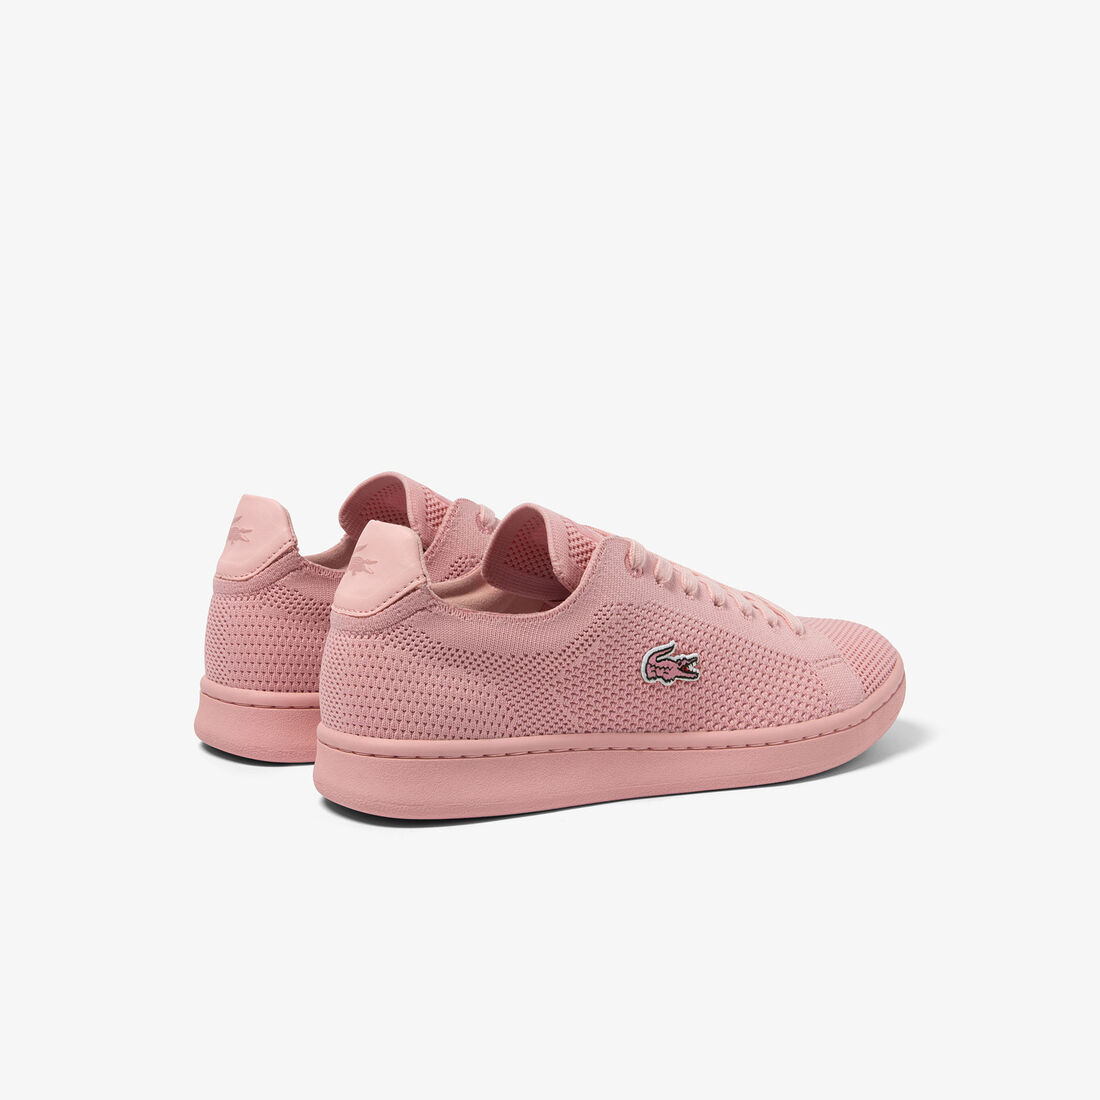 Lacoste Carnaby Piqué Textil Heel Pop Sneakers Damen Rosa | PIRV-91830